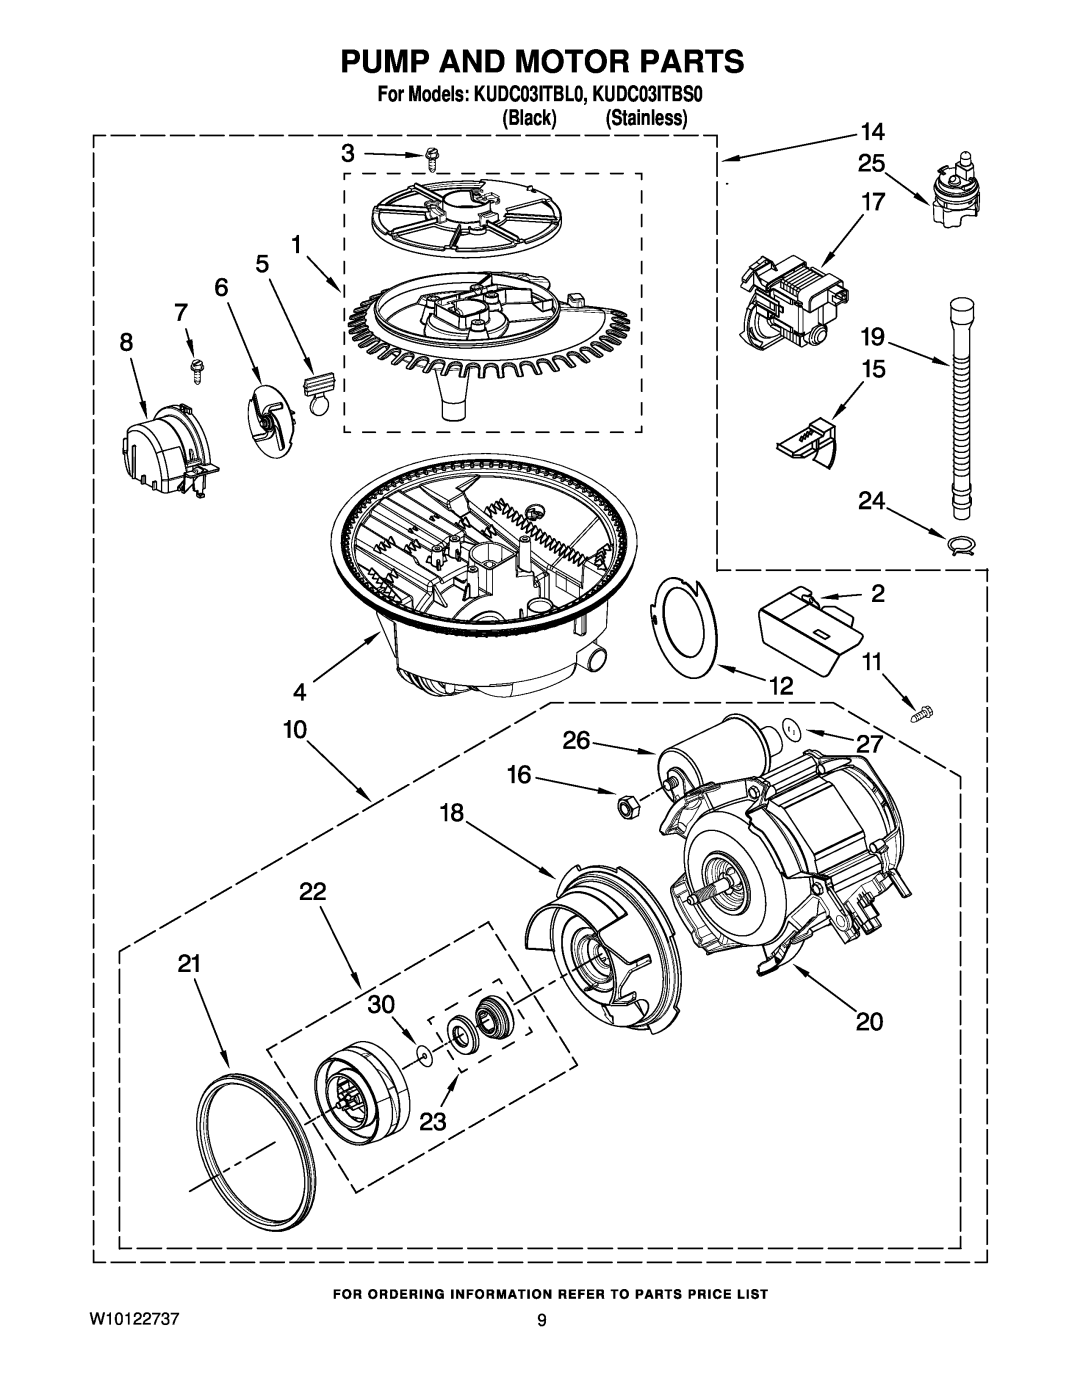 KitchenAid manual Pump And Motor Parts, For Models KUDC03ITBL0, KUDC03ITBS0 Black Stainless 